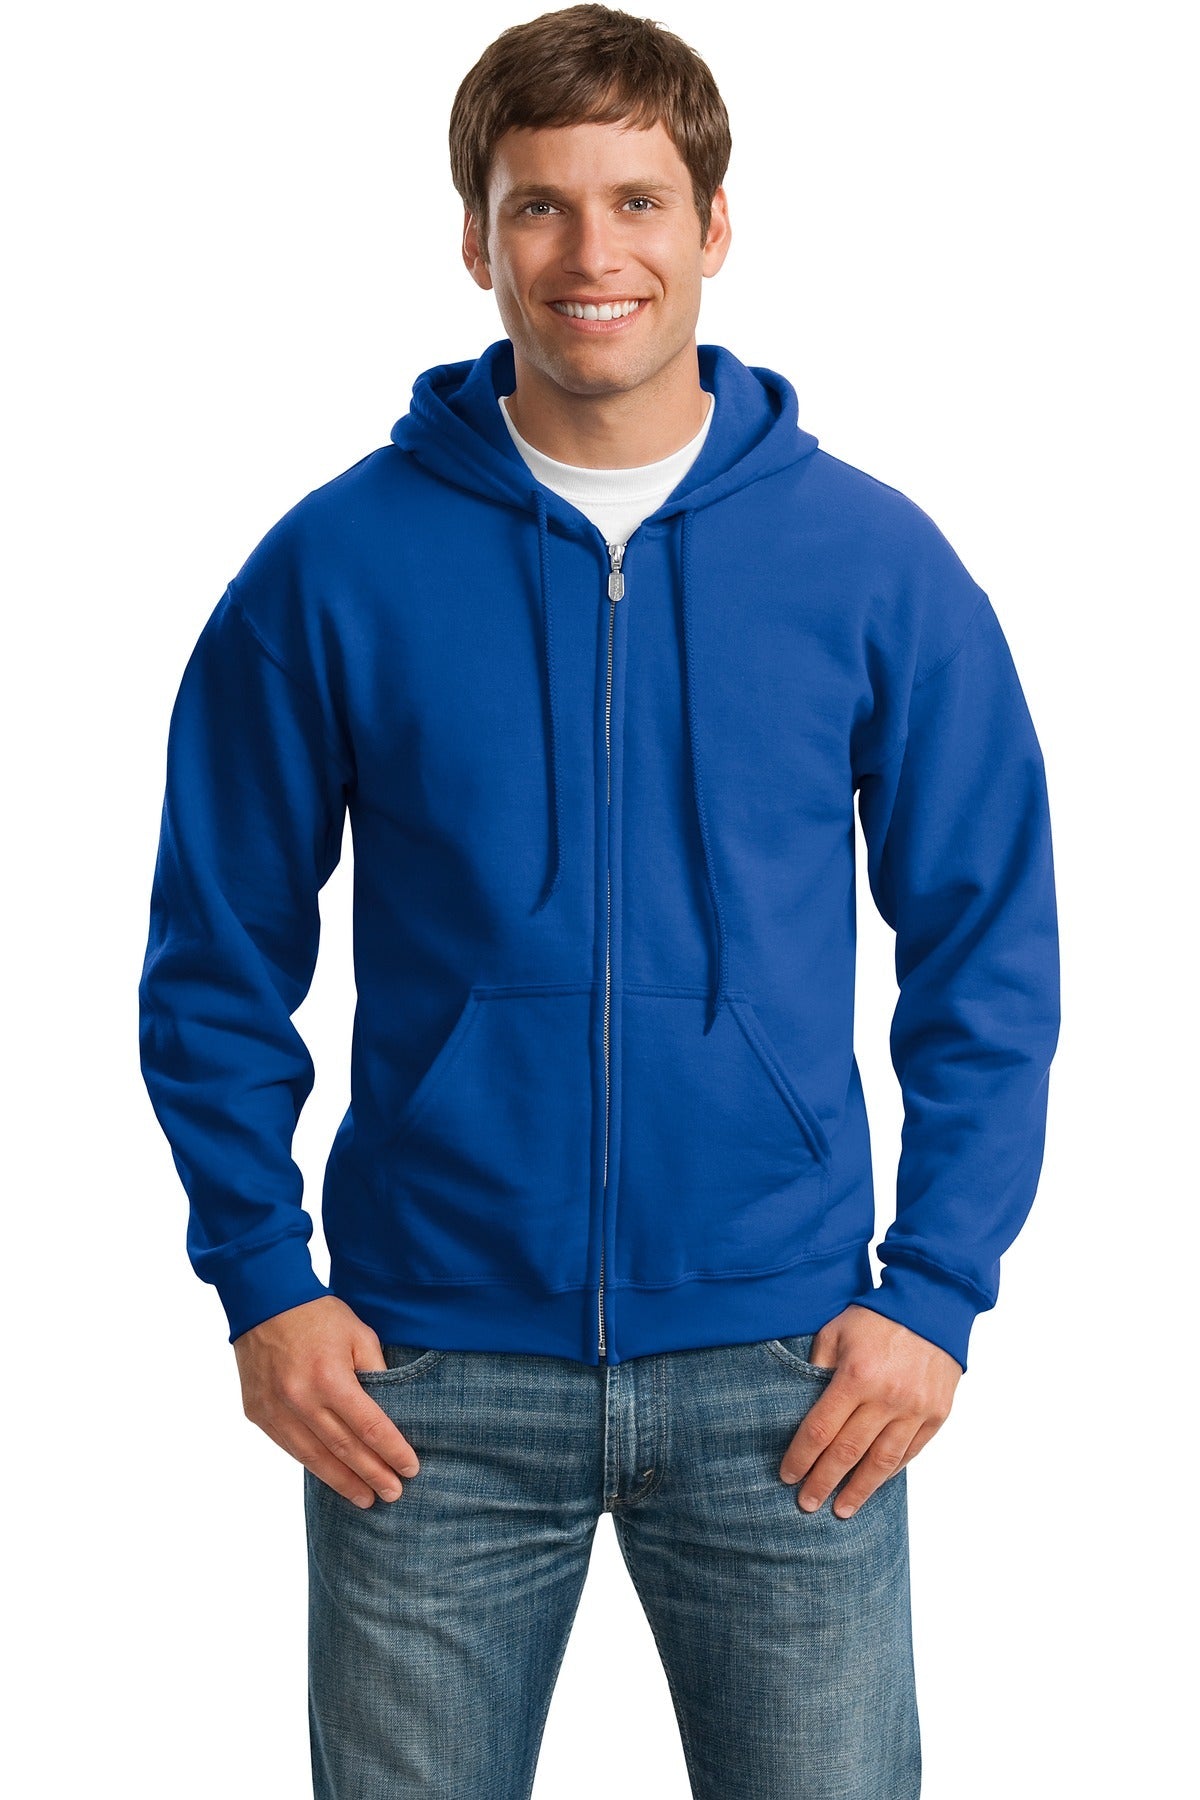 Gildan - Heavy Blend Full-Zip Hooded Sweatshirt - 18600